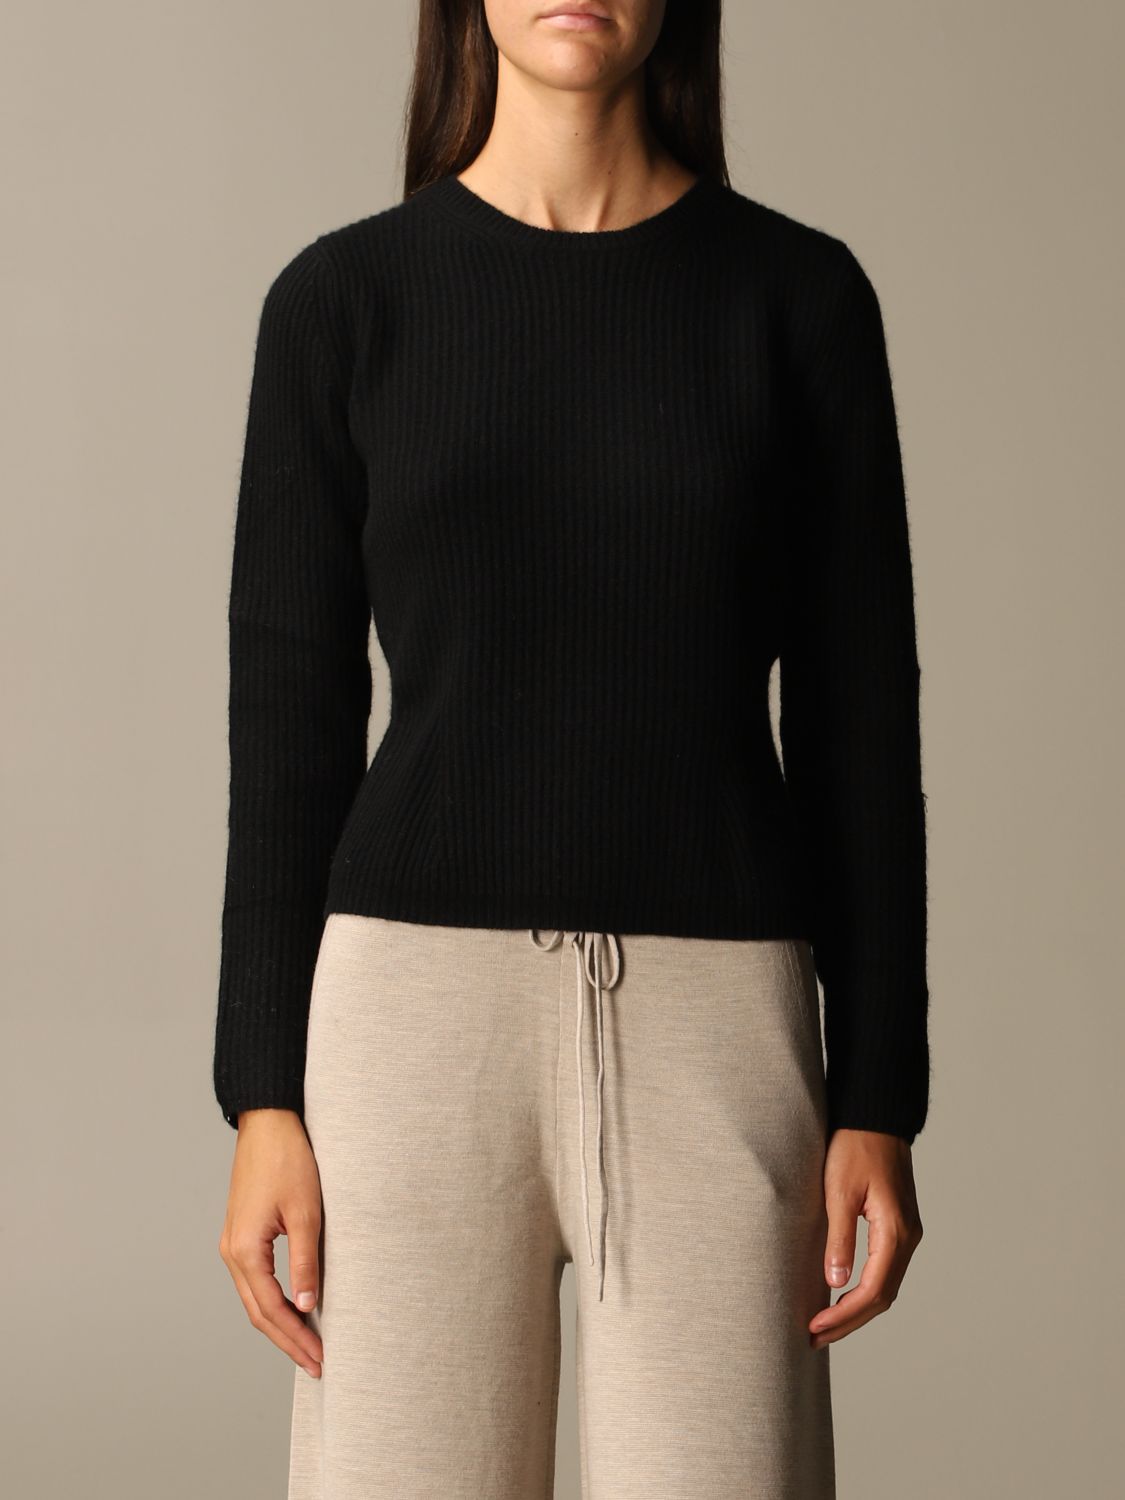 Max Mara Outlet: Peirak cashmere and wool sweater - Black | Max Mara